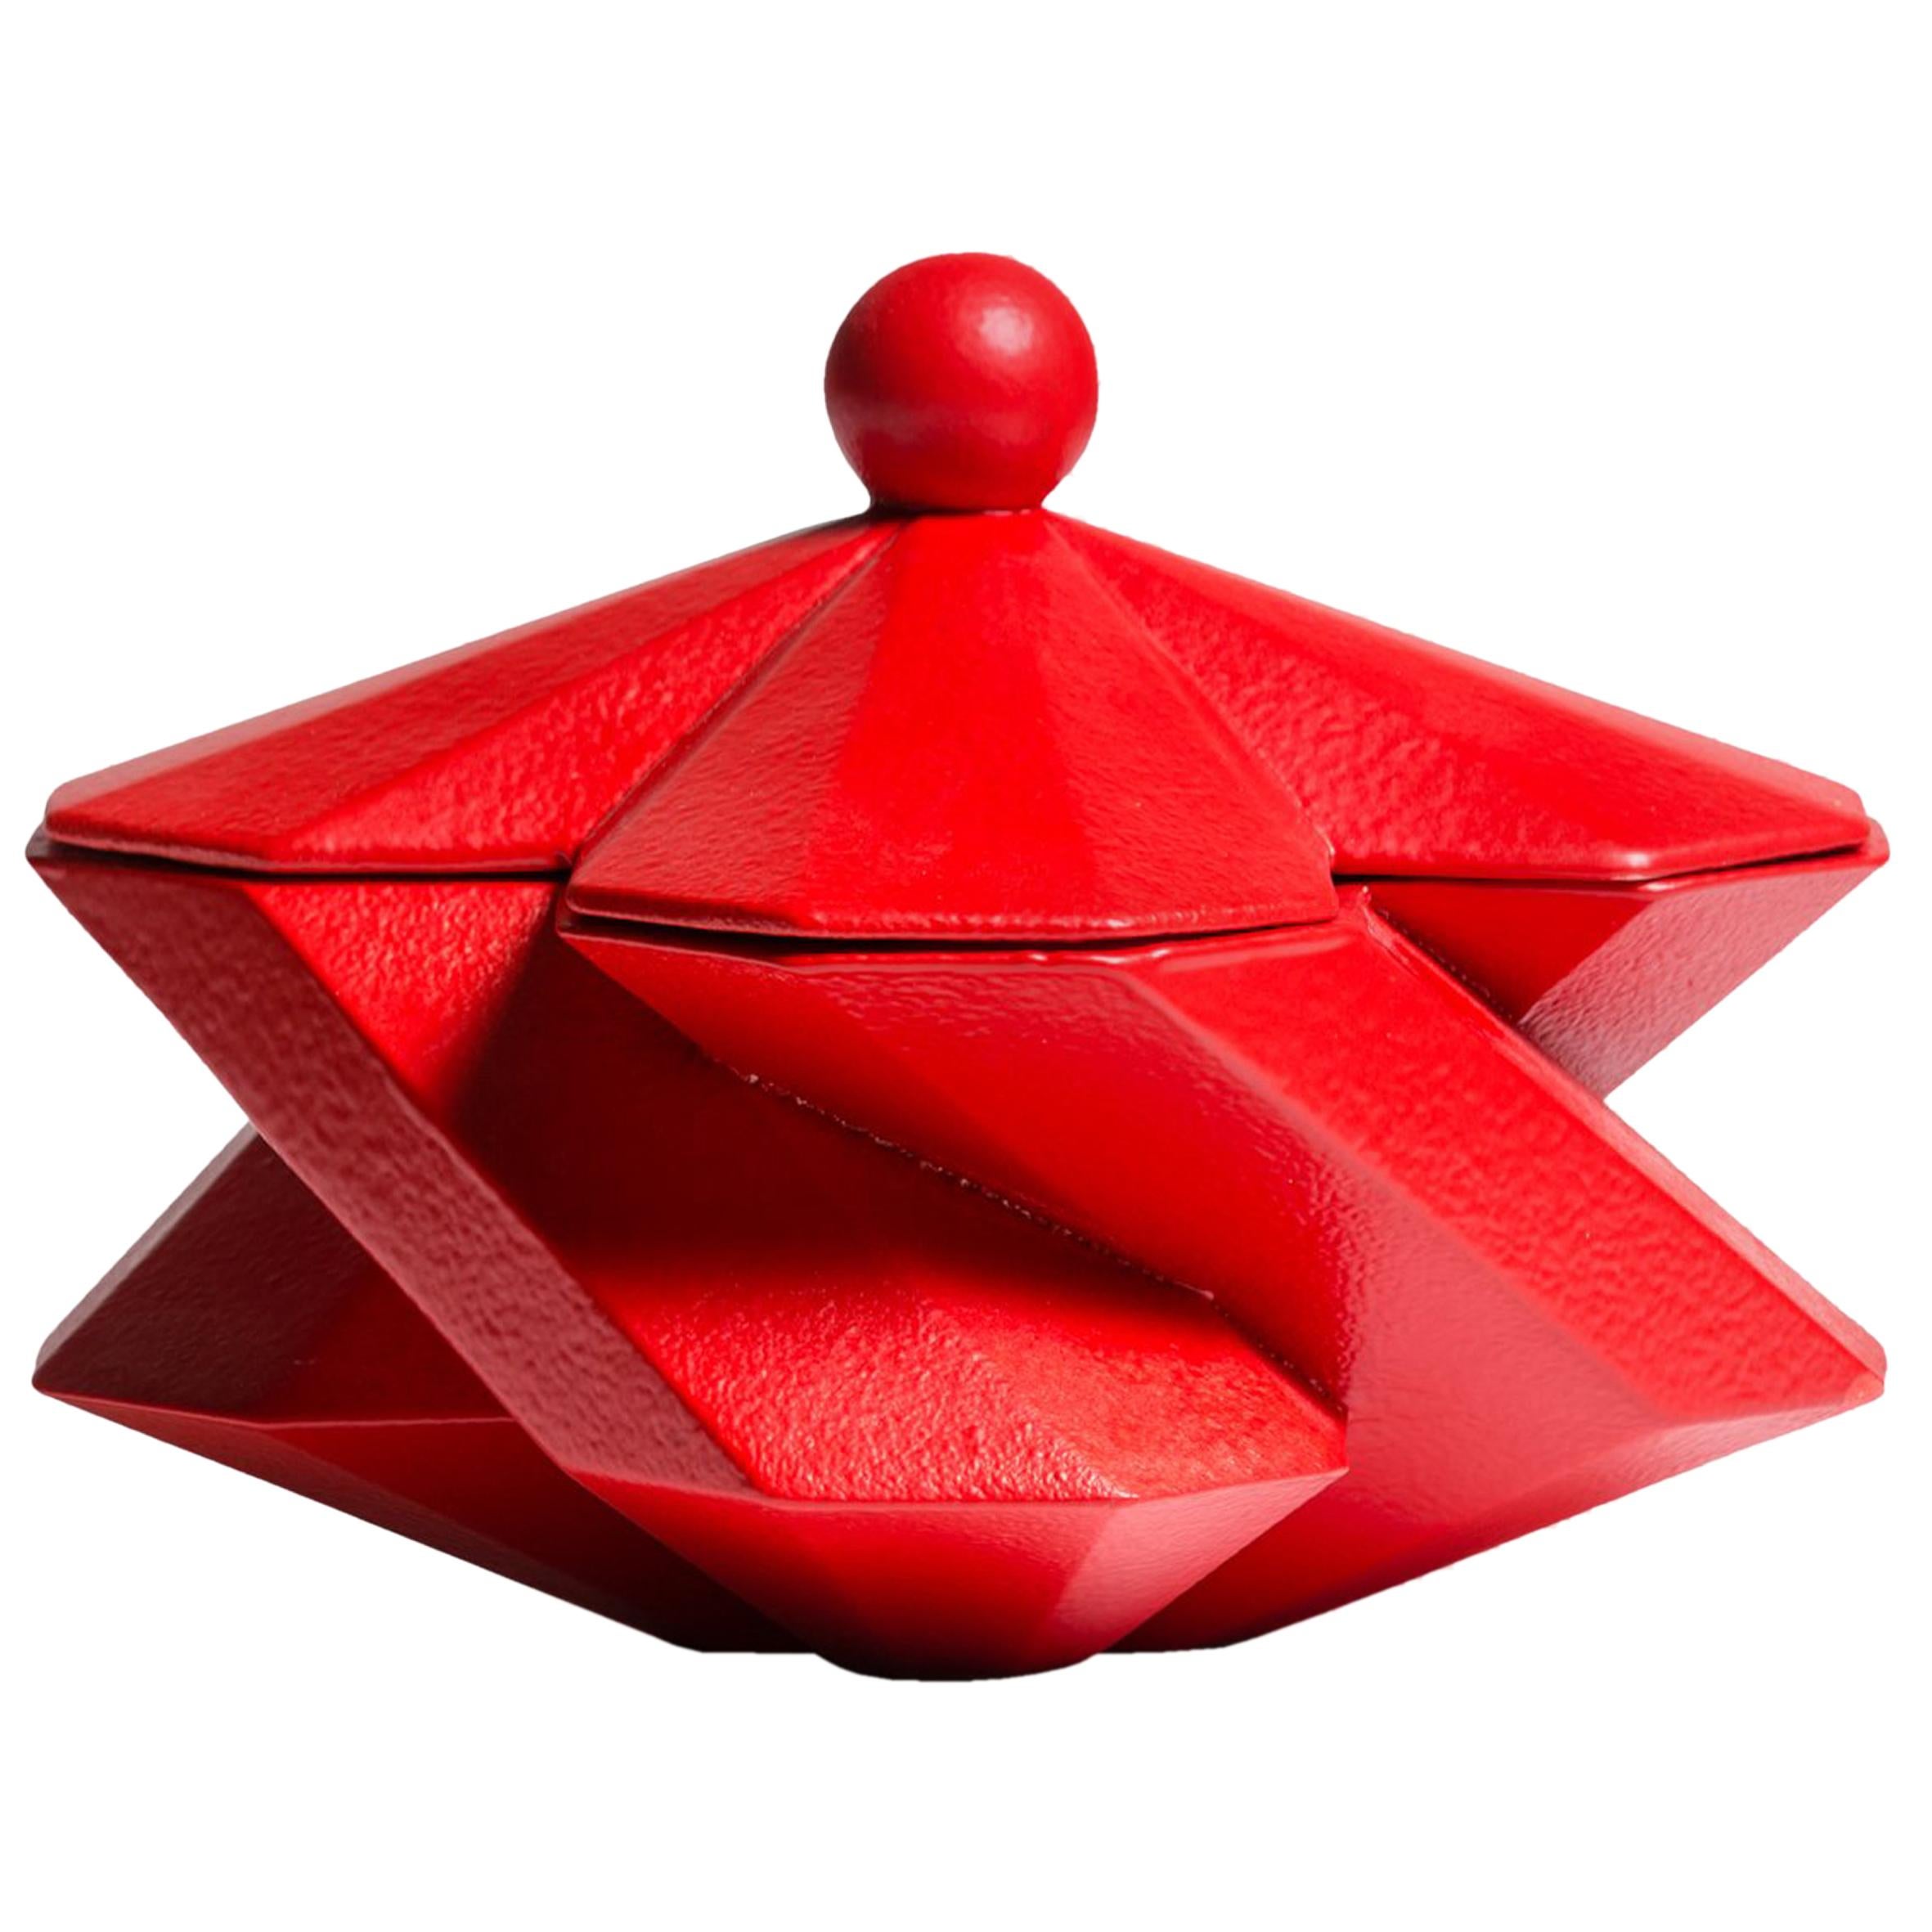 Fortress Treasury Box in Red Ceramic by Lara Bohinc